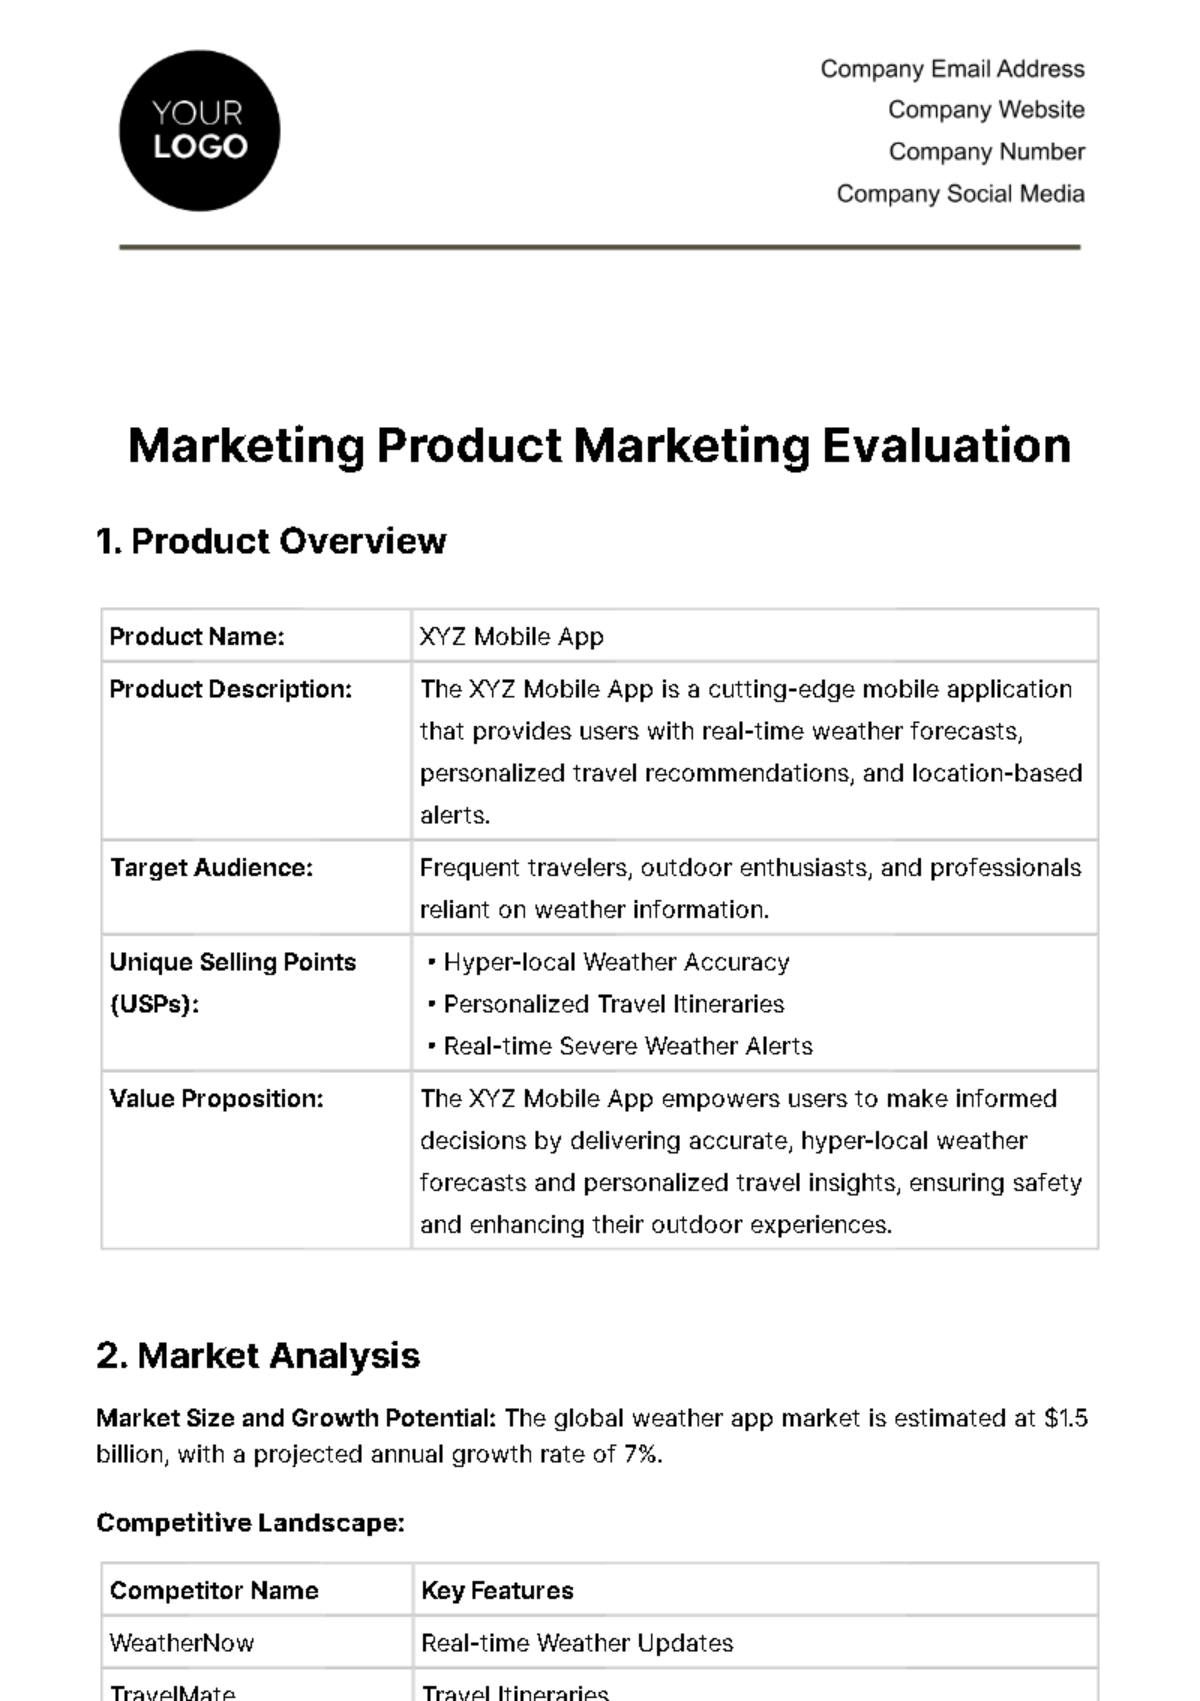 Marketing Product Marketing Evaluation Template